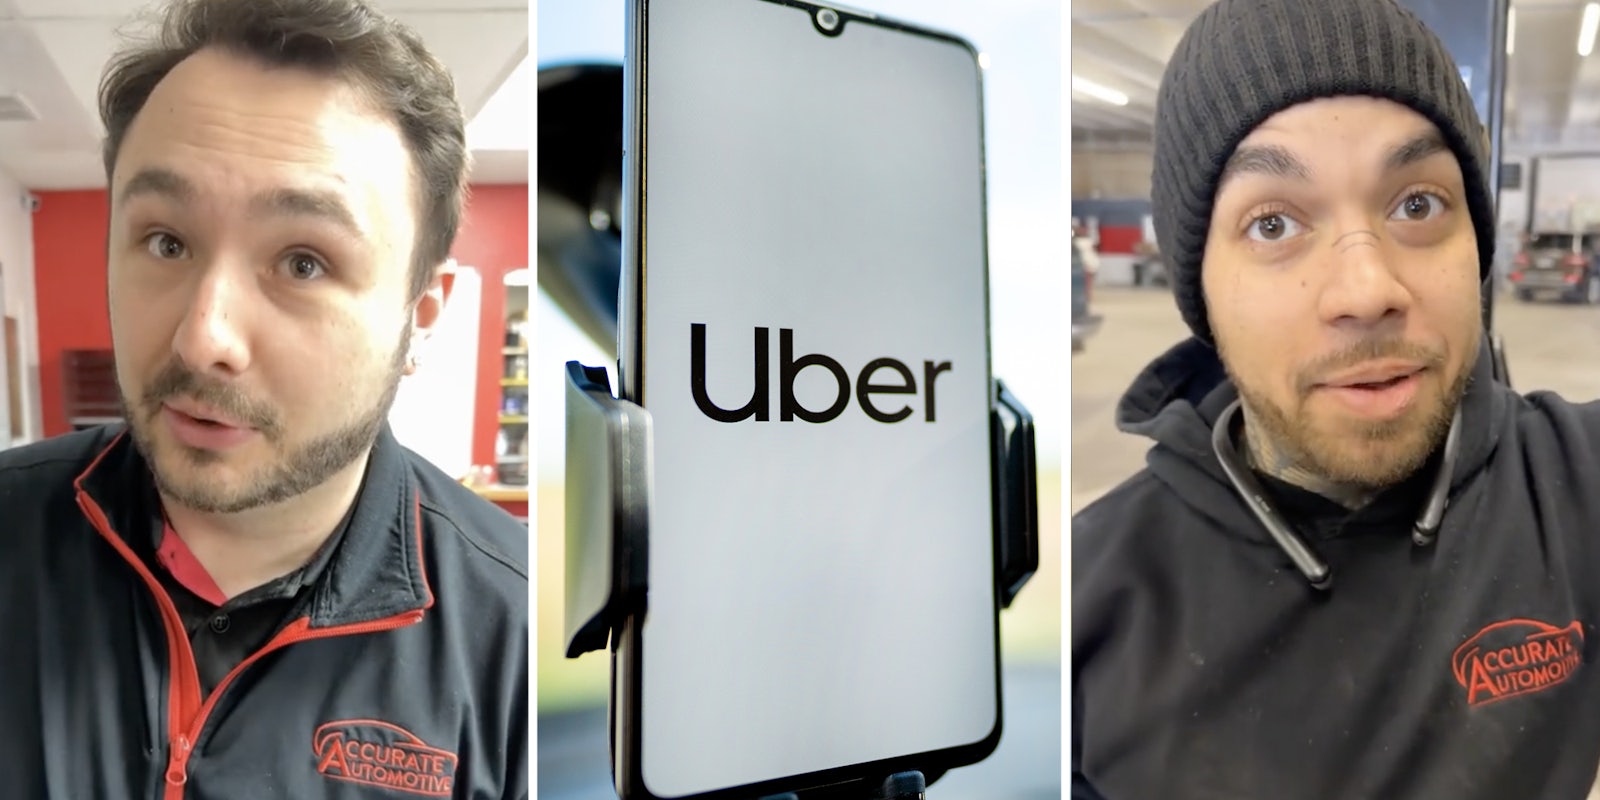 Man talking(l), Uber app on phone(c), Different man talking(r)